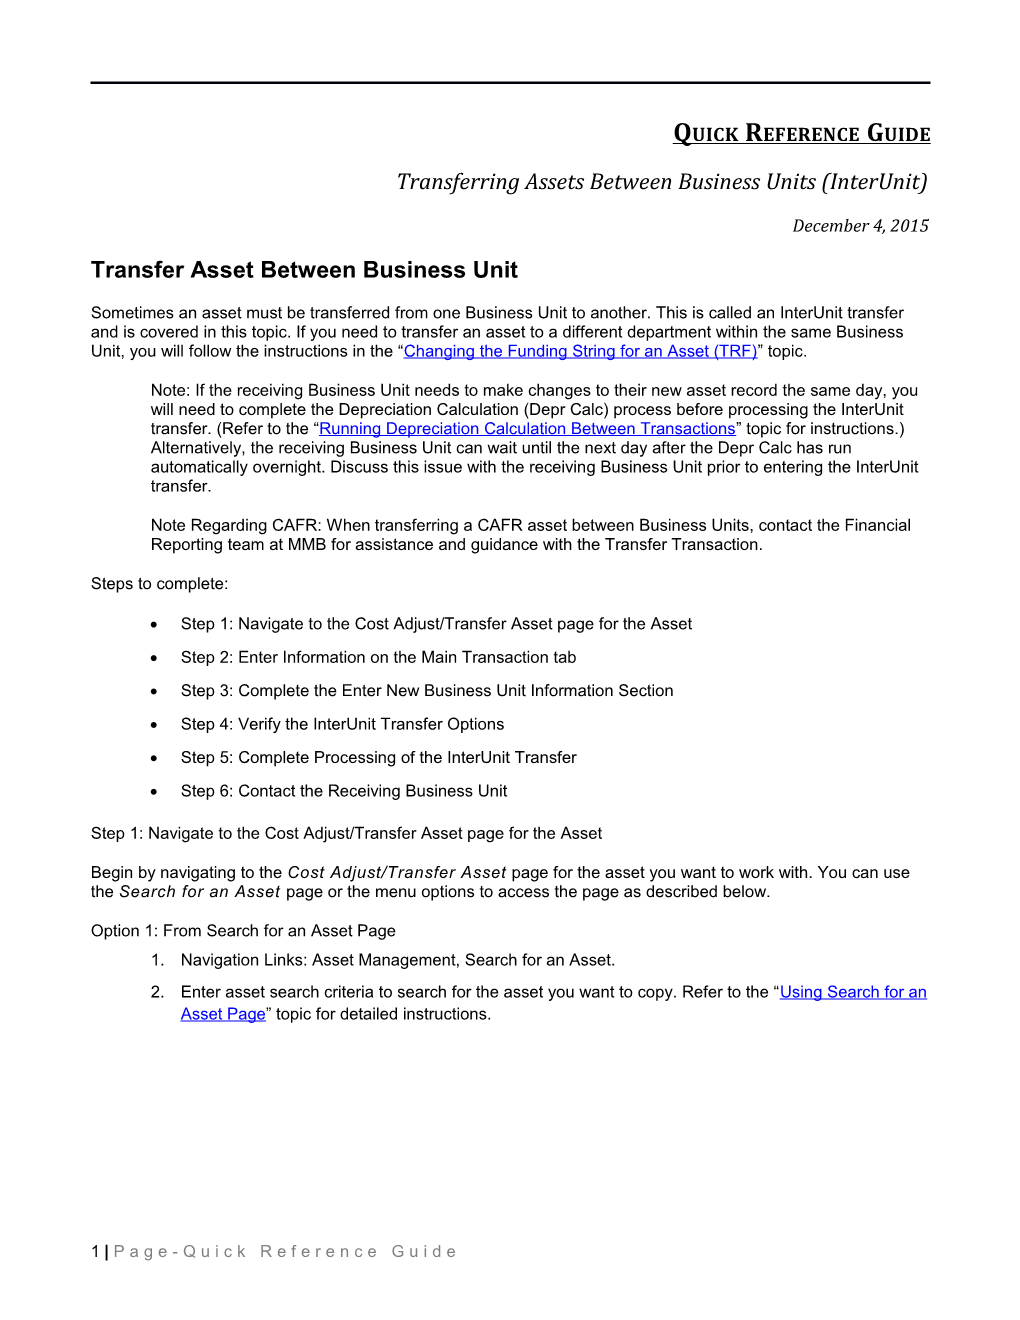 Transferring Assets Between Business Units (Interunit)